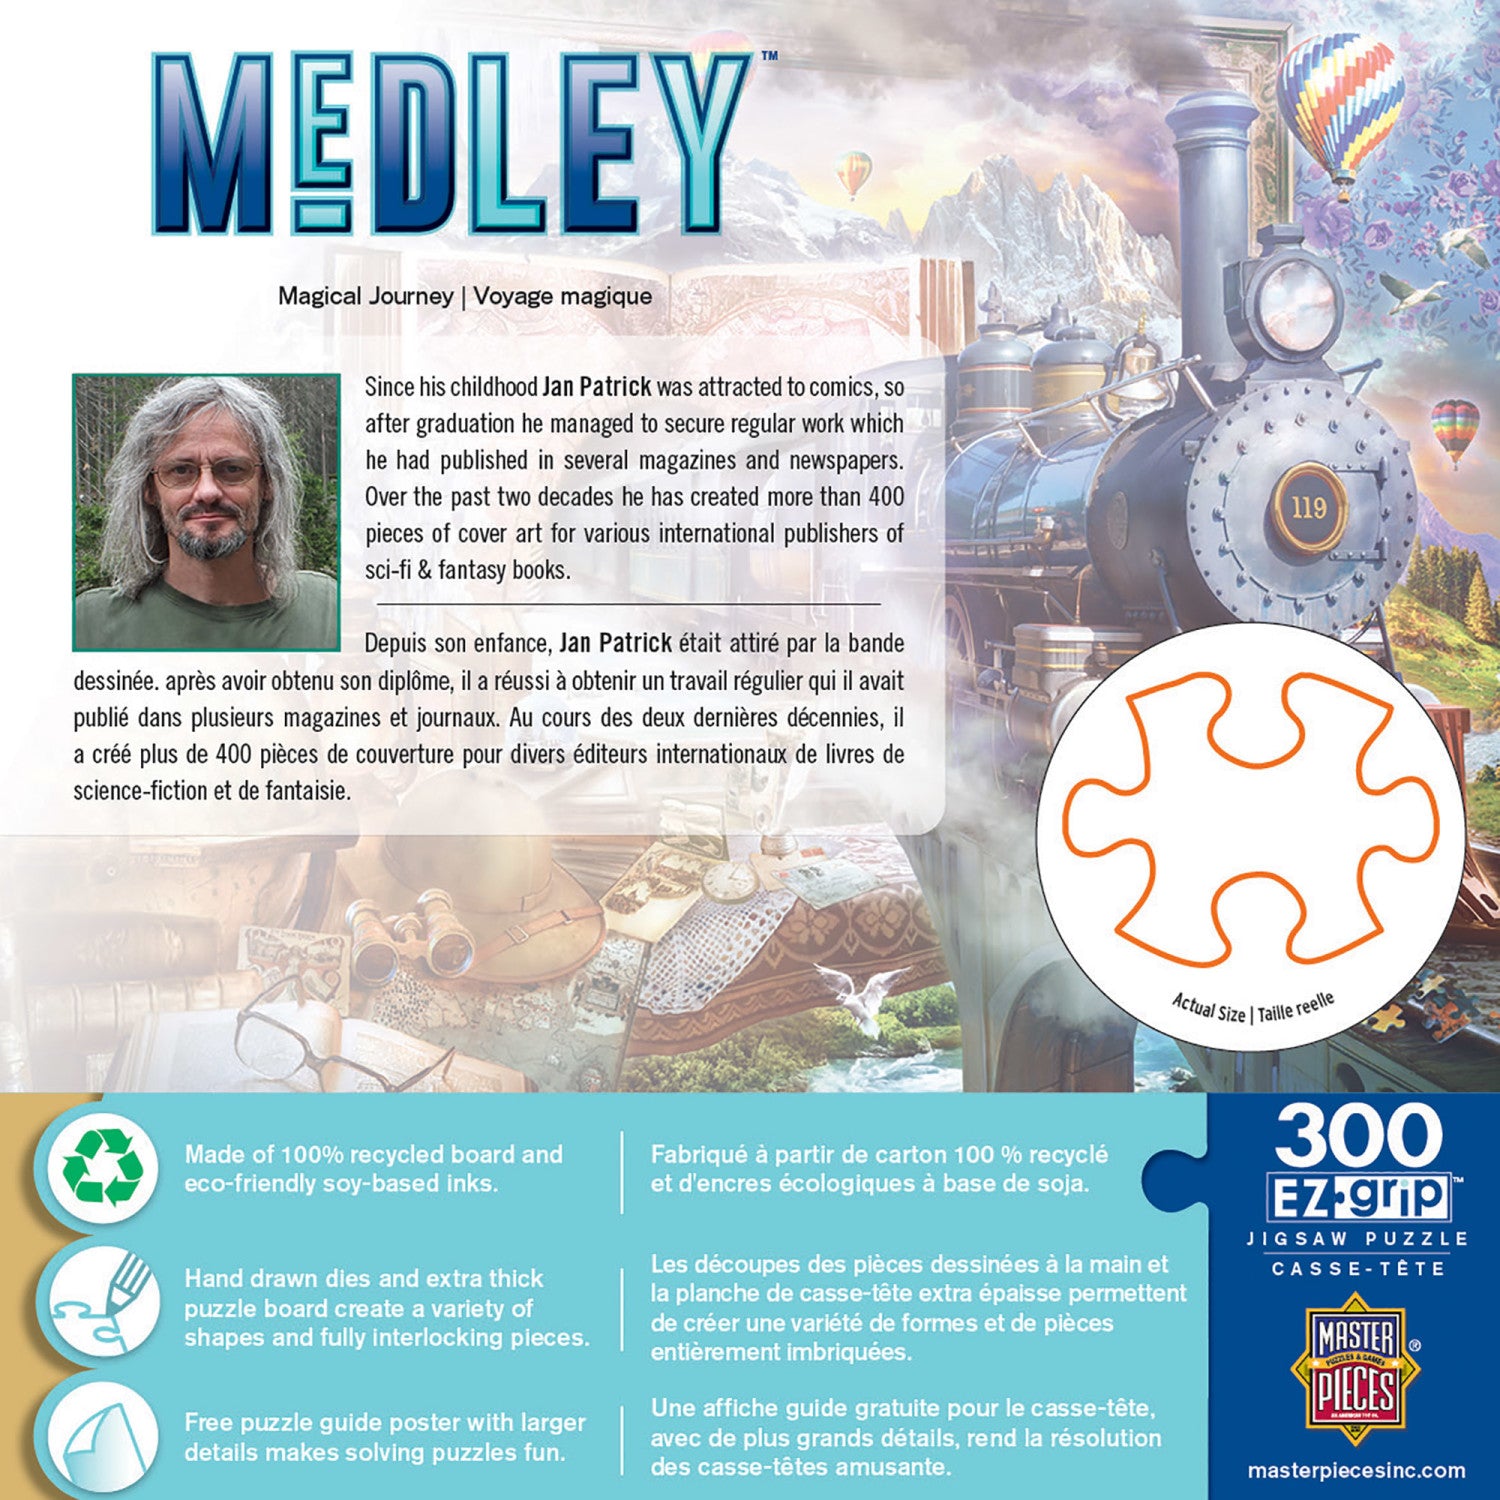 Medley - Magical Journey 300 Piece EZ Grip Jigsaw Puzzle